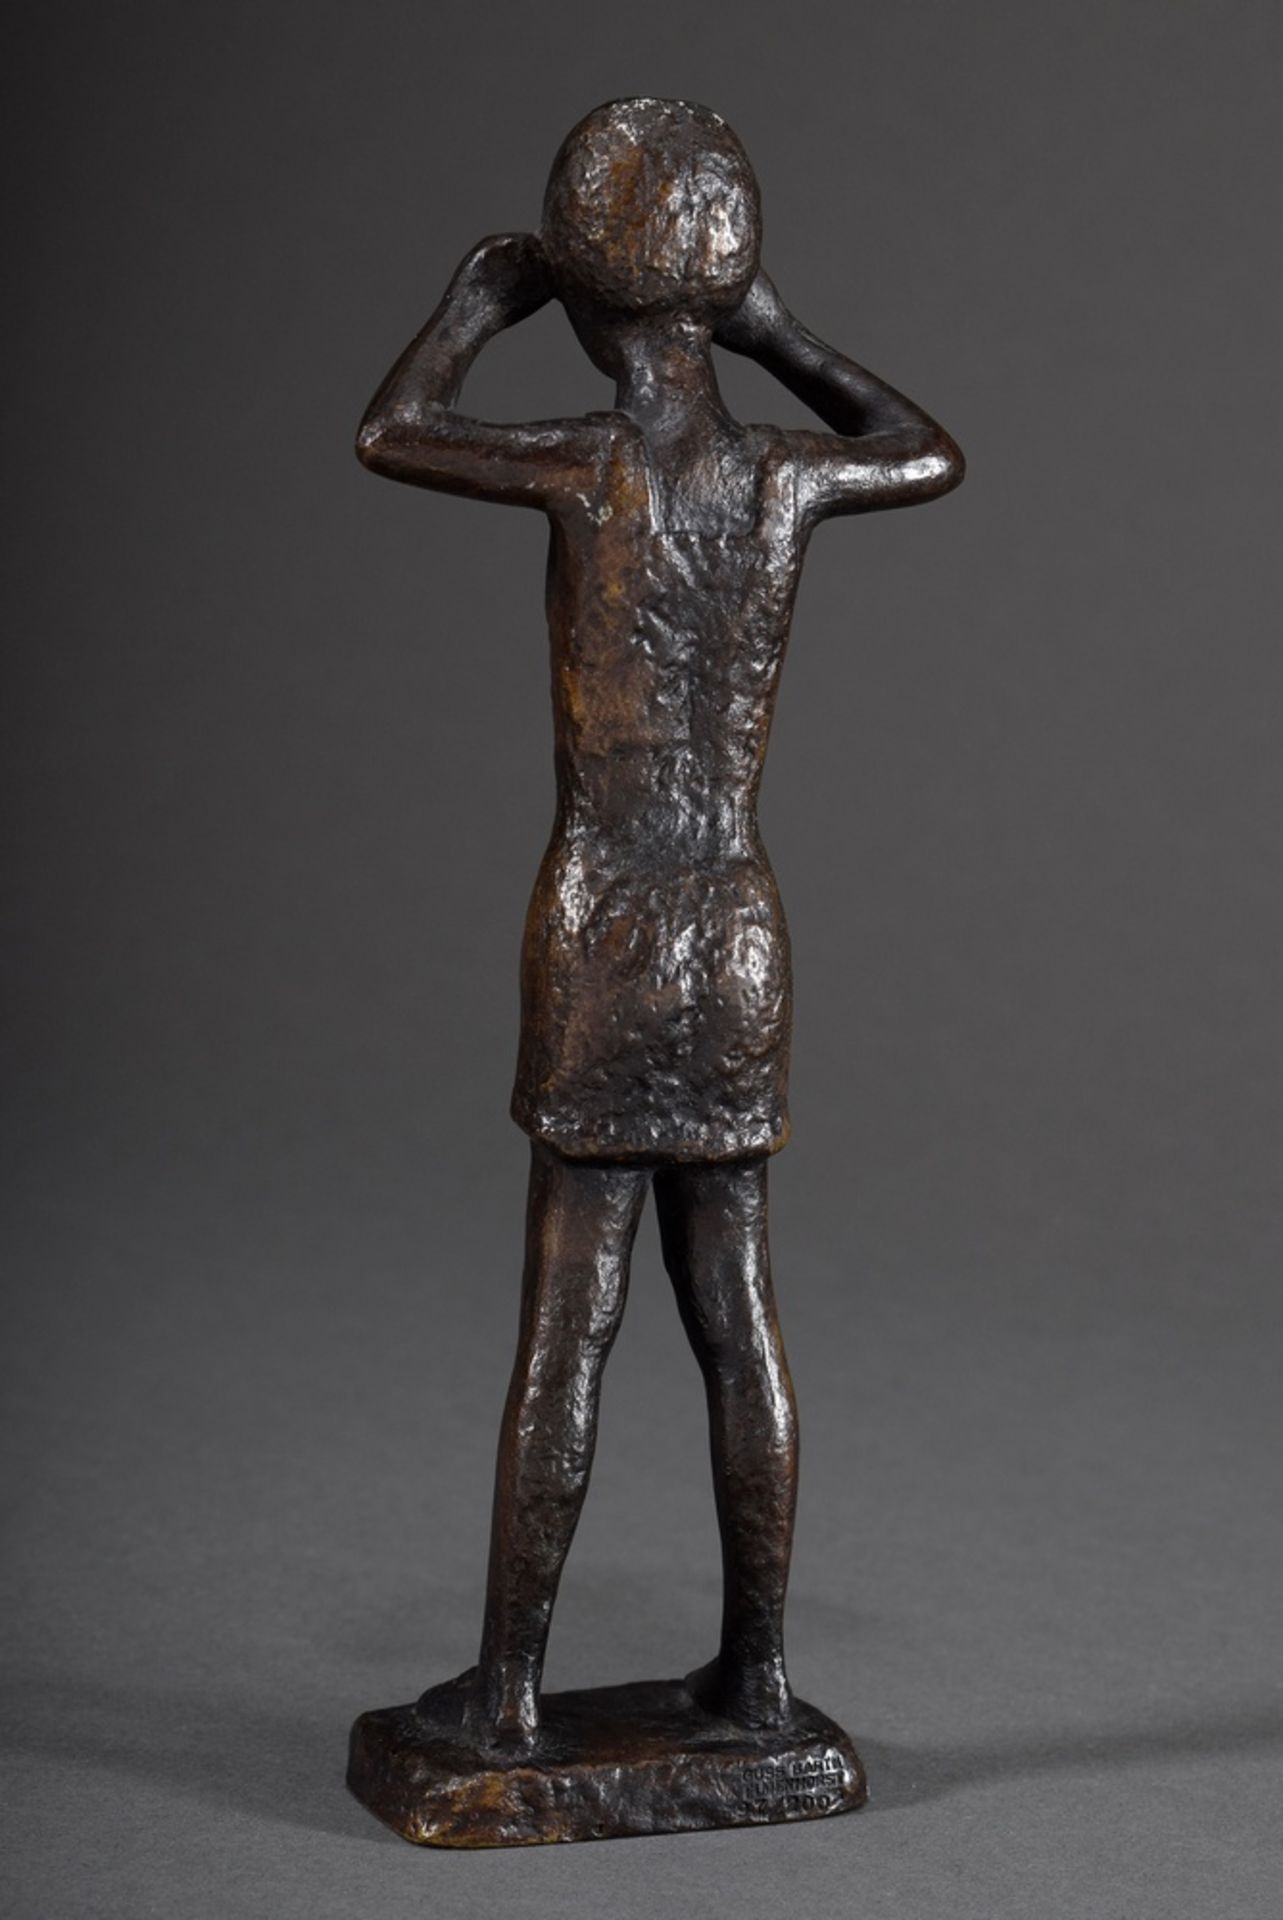 Meyer, Ehler (1923-2002) "Jasmine", bronze, 97/200, cast Barth Elmenhorst, art award 1979 of the fo - Image 2 of 6